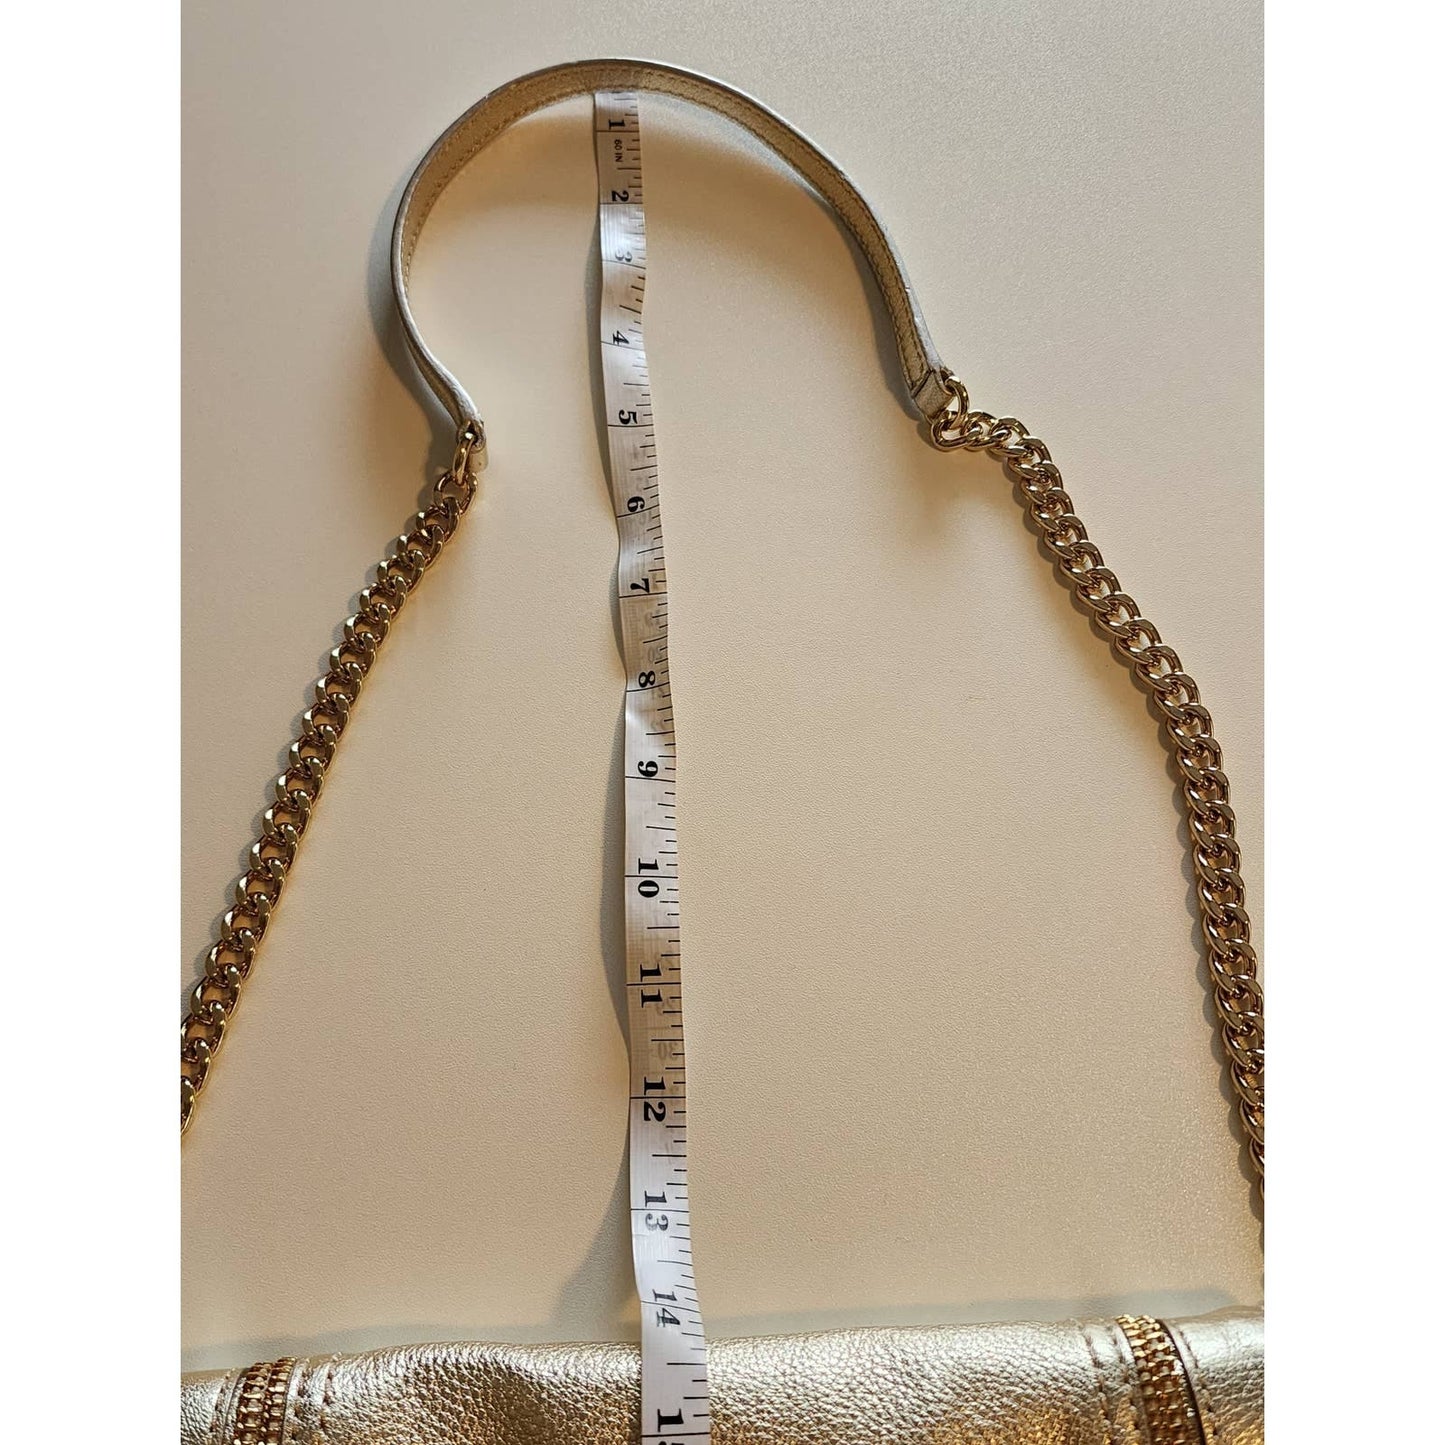 Michael Kors Naomi Zipper Clutch with Chain Shoulder Strap Gold